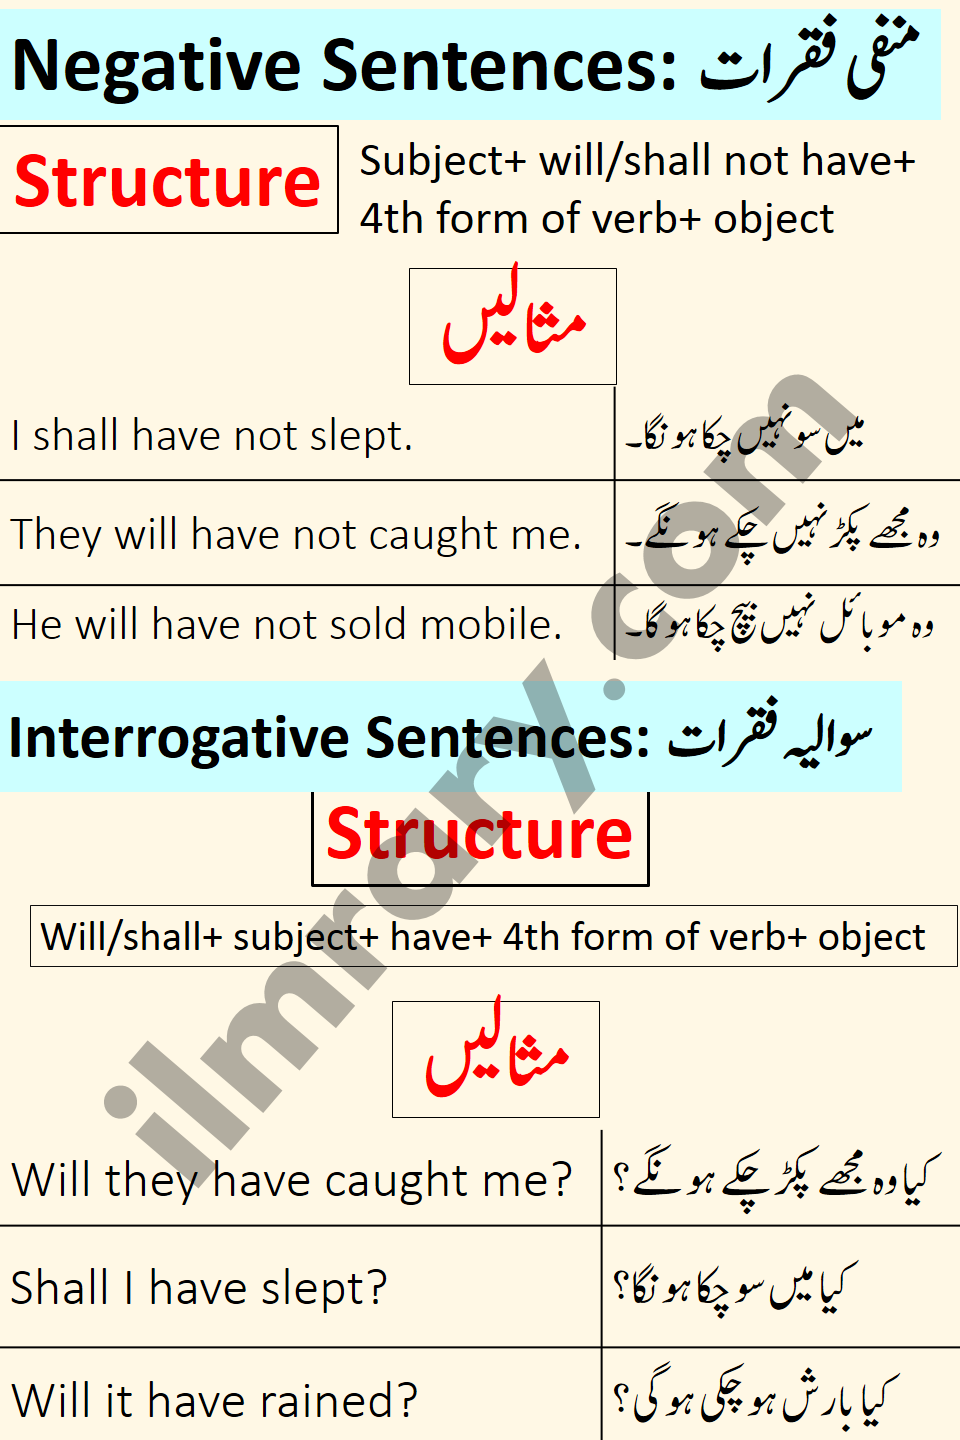 Negative and Interrogative Examples for Future Perfect Tense in Urdu